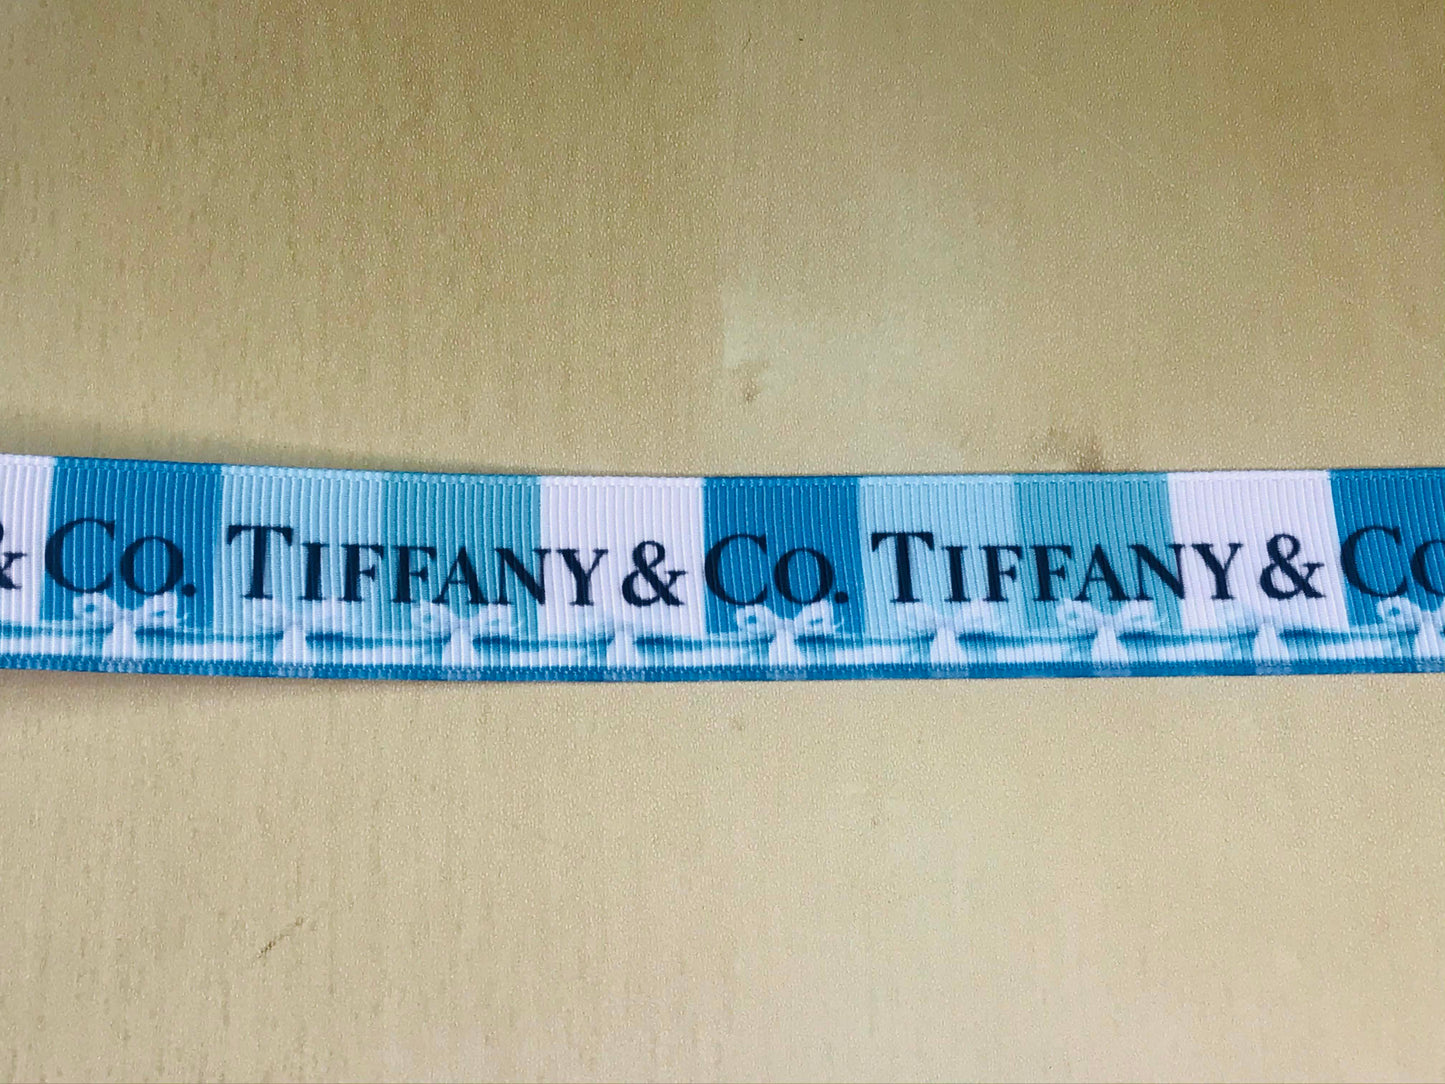 7/8" Tiffany & Co. Diamonds and Sparkle Jewelry Designer Logo Printed Grosgrain Ribbon